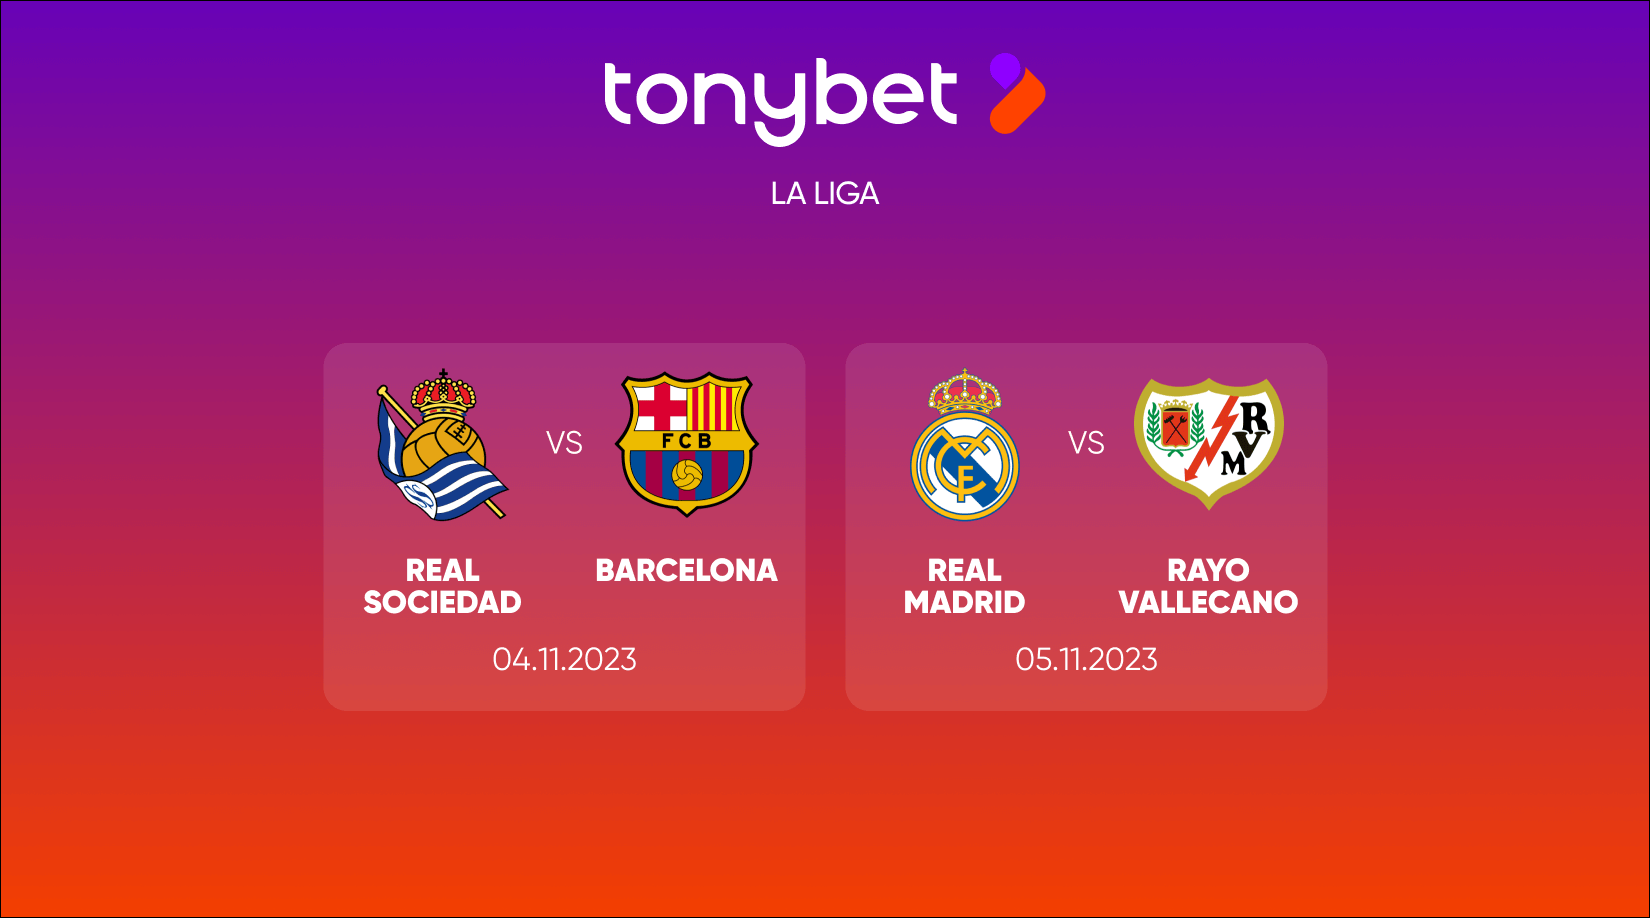 Real Sociedad vs. Barcelona, Real Madrid vs. Rayo Vallecano. La Liga Top Match Predictions, Odds, and Betting Tips